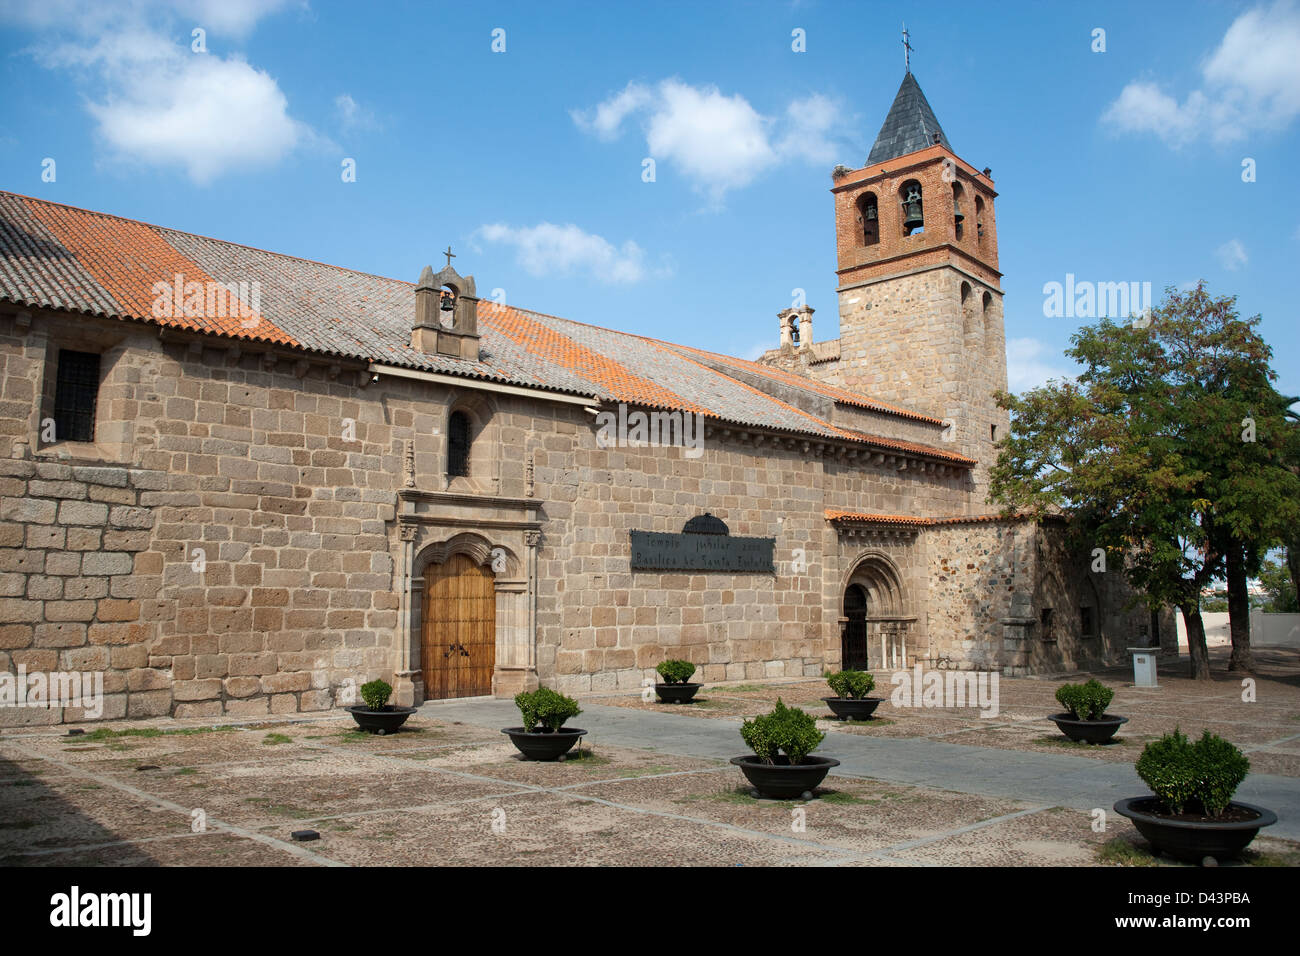 Basilica de Santa Eulalia Merida Spain Stock Photo - Alamy